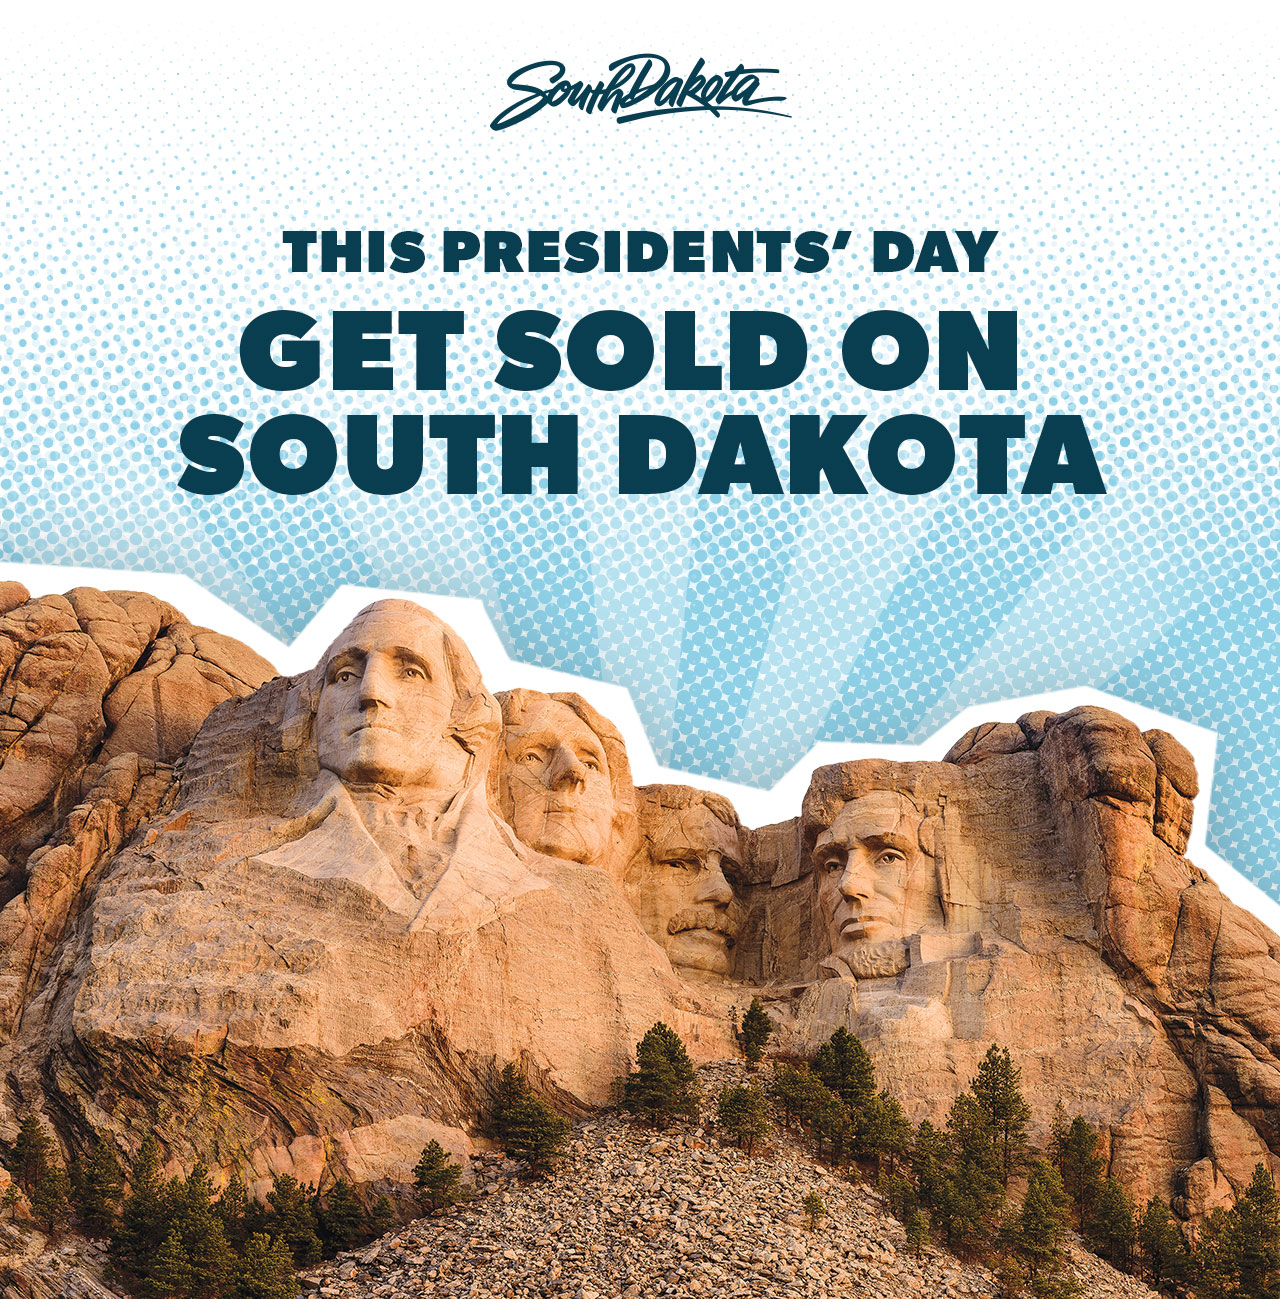 South Dakota - This Presidents' Day Get Sold on South Dakota